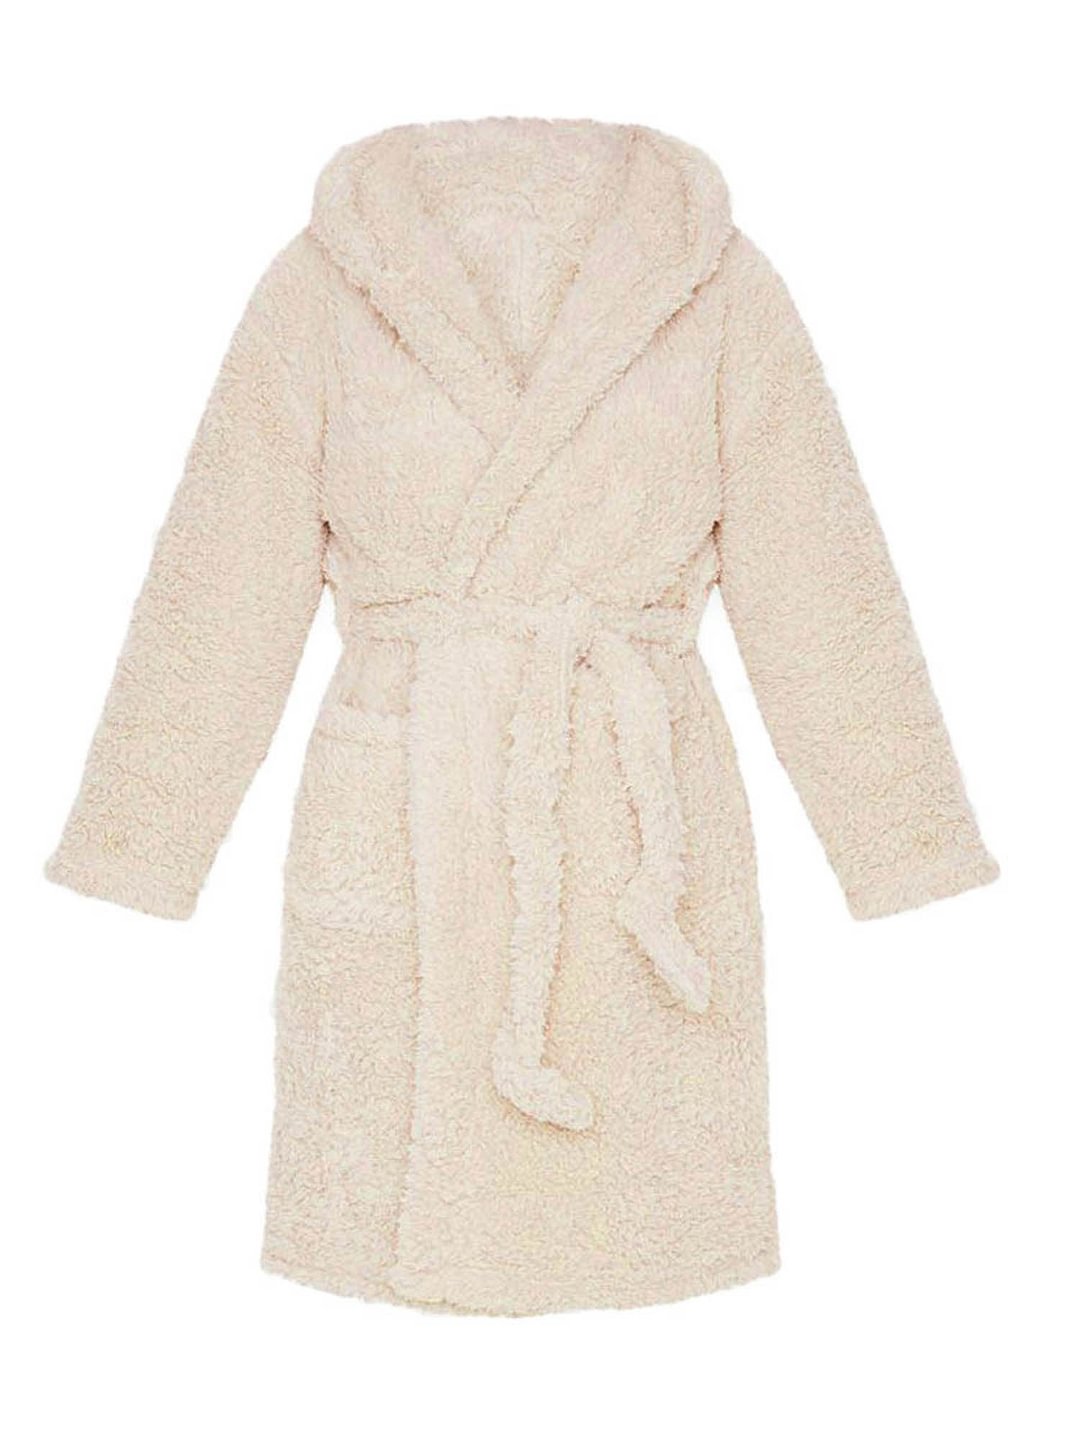 Bathrobe Nightgown Thick Warm Robe Winter Unicorn Plush Pajamas Pink White Cute Animal Flannel Bath Robe Women Men Sleepwear